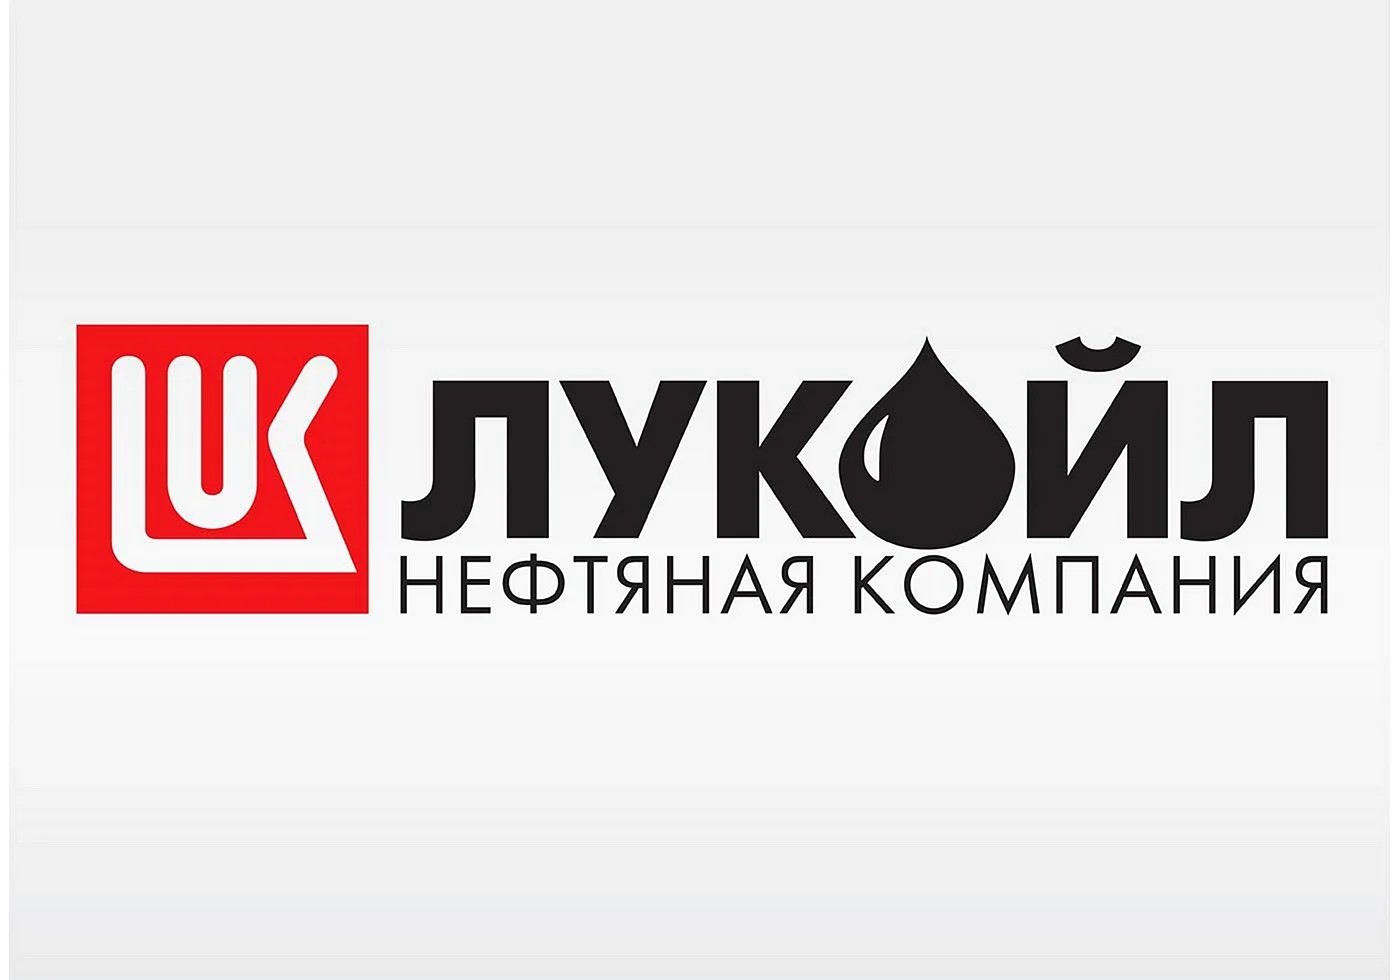 Лукойл нефтяная компания эмблема